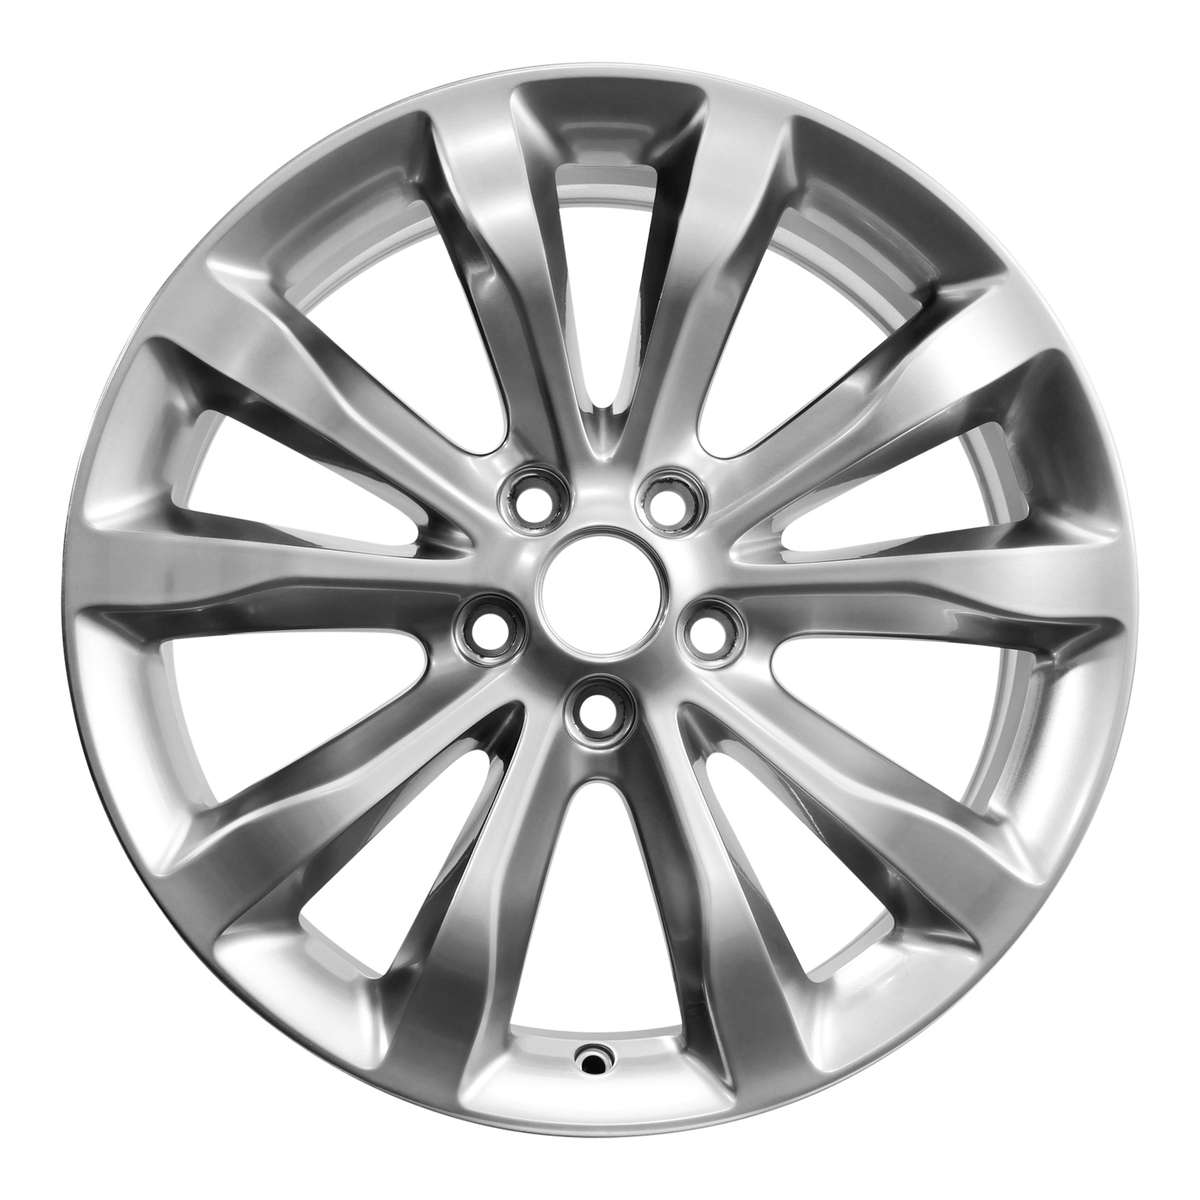 2021 Chrysler 300 19" OEM Wheel Rim W2538H